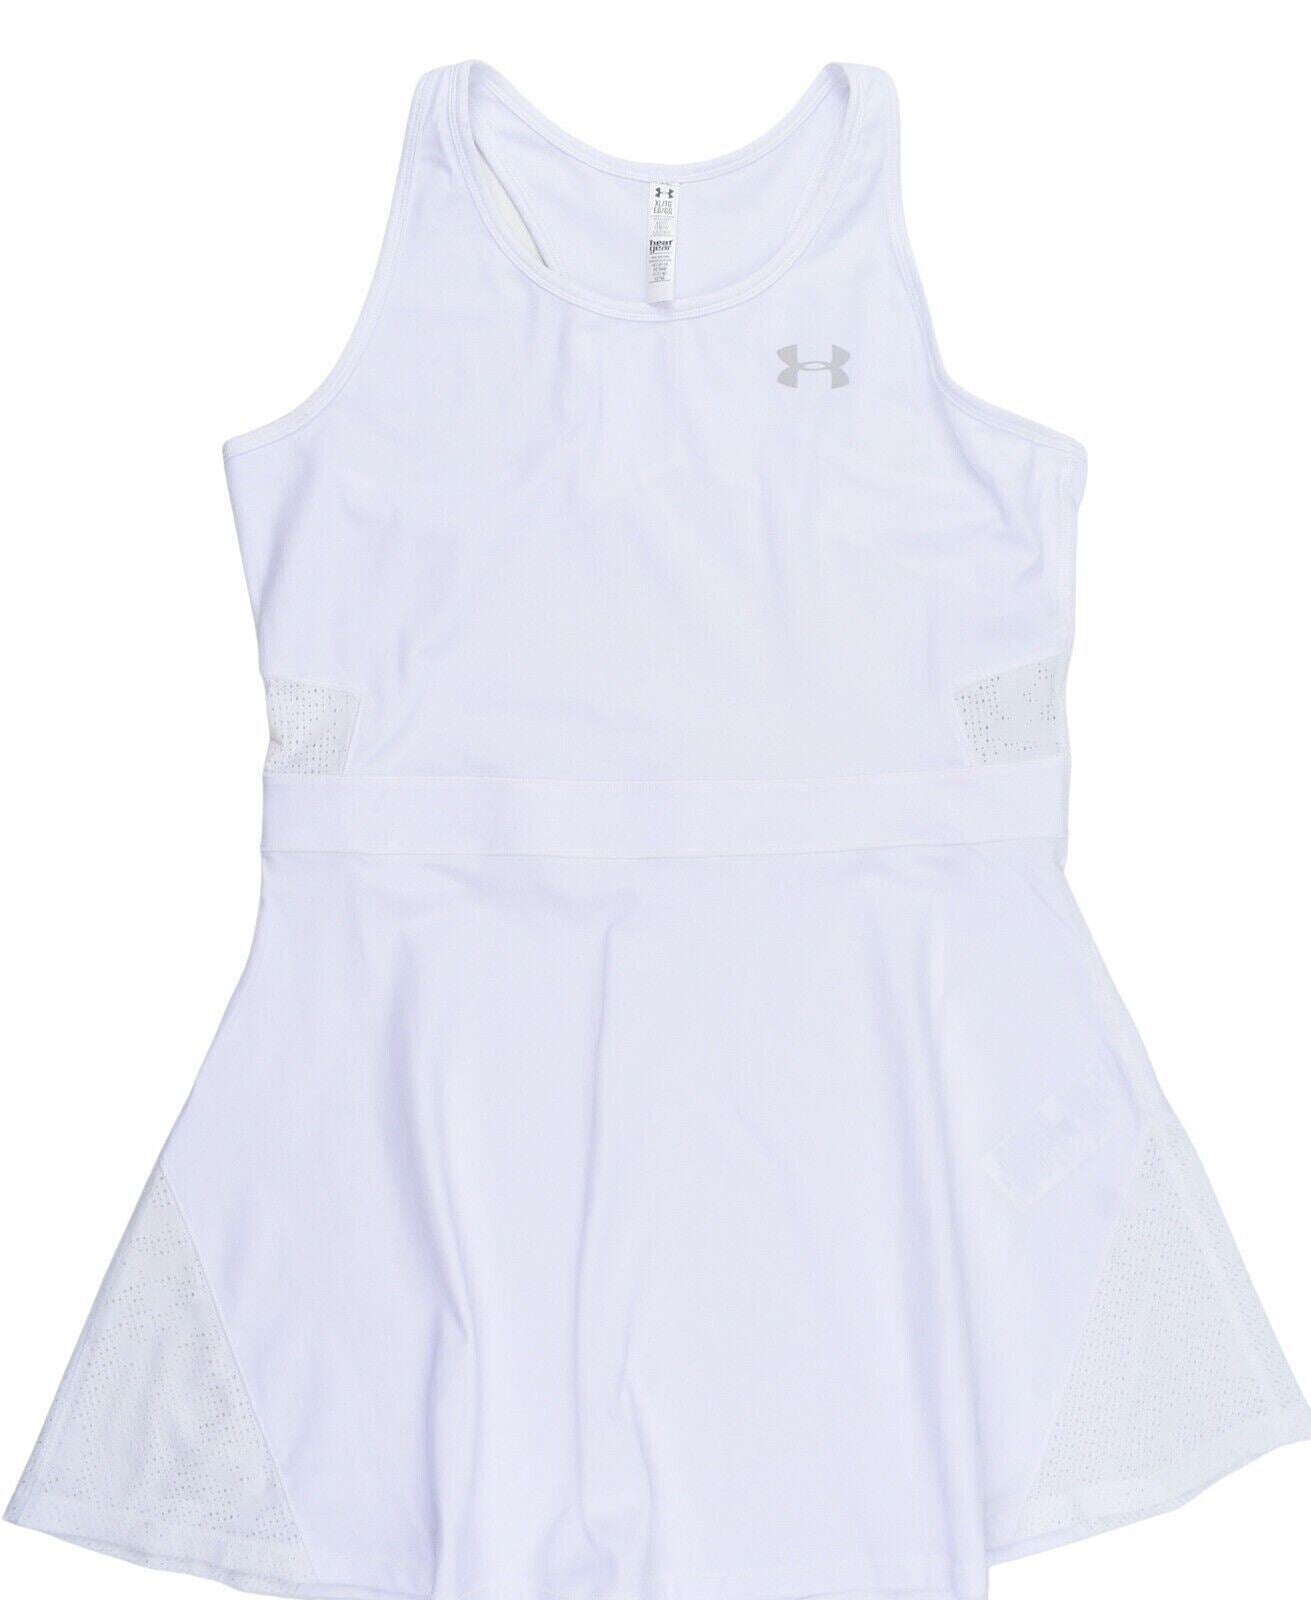 UNDER ARMOUR Womens Centre Court Tennis Dress, White, size XL/UK 16